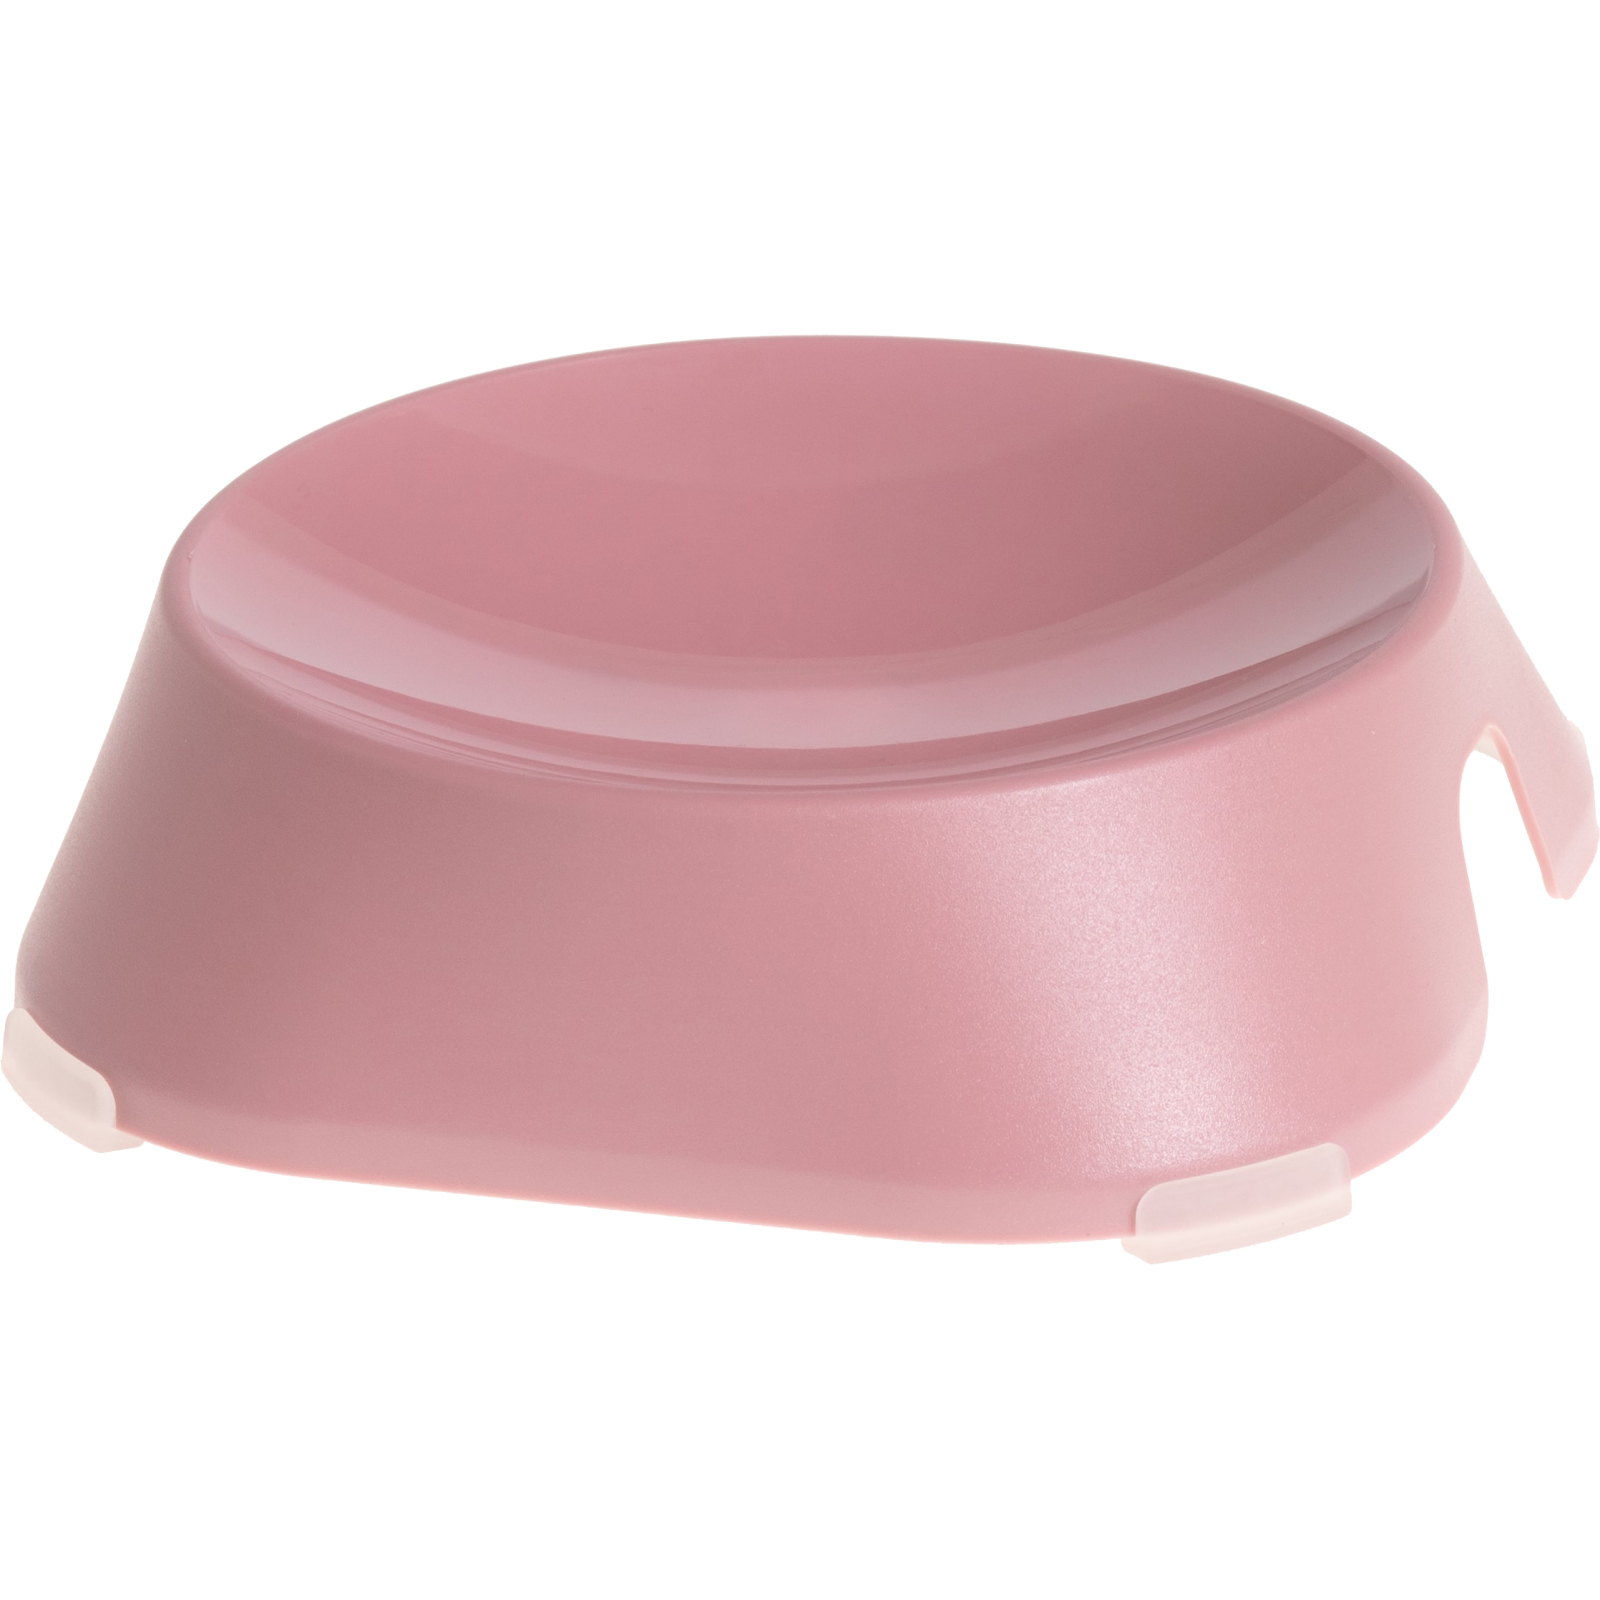 Посуда для кошек Fiboo Flat Bowl миска без антискользящих накладок розовая (FIB0129)